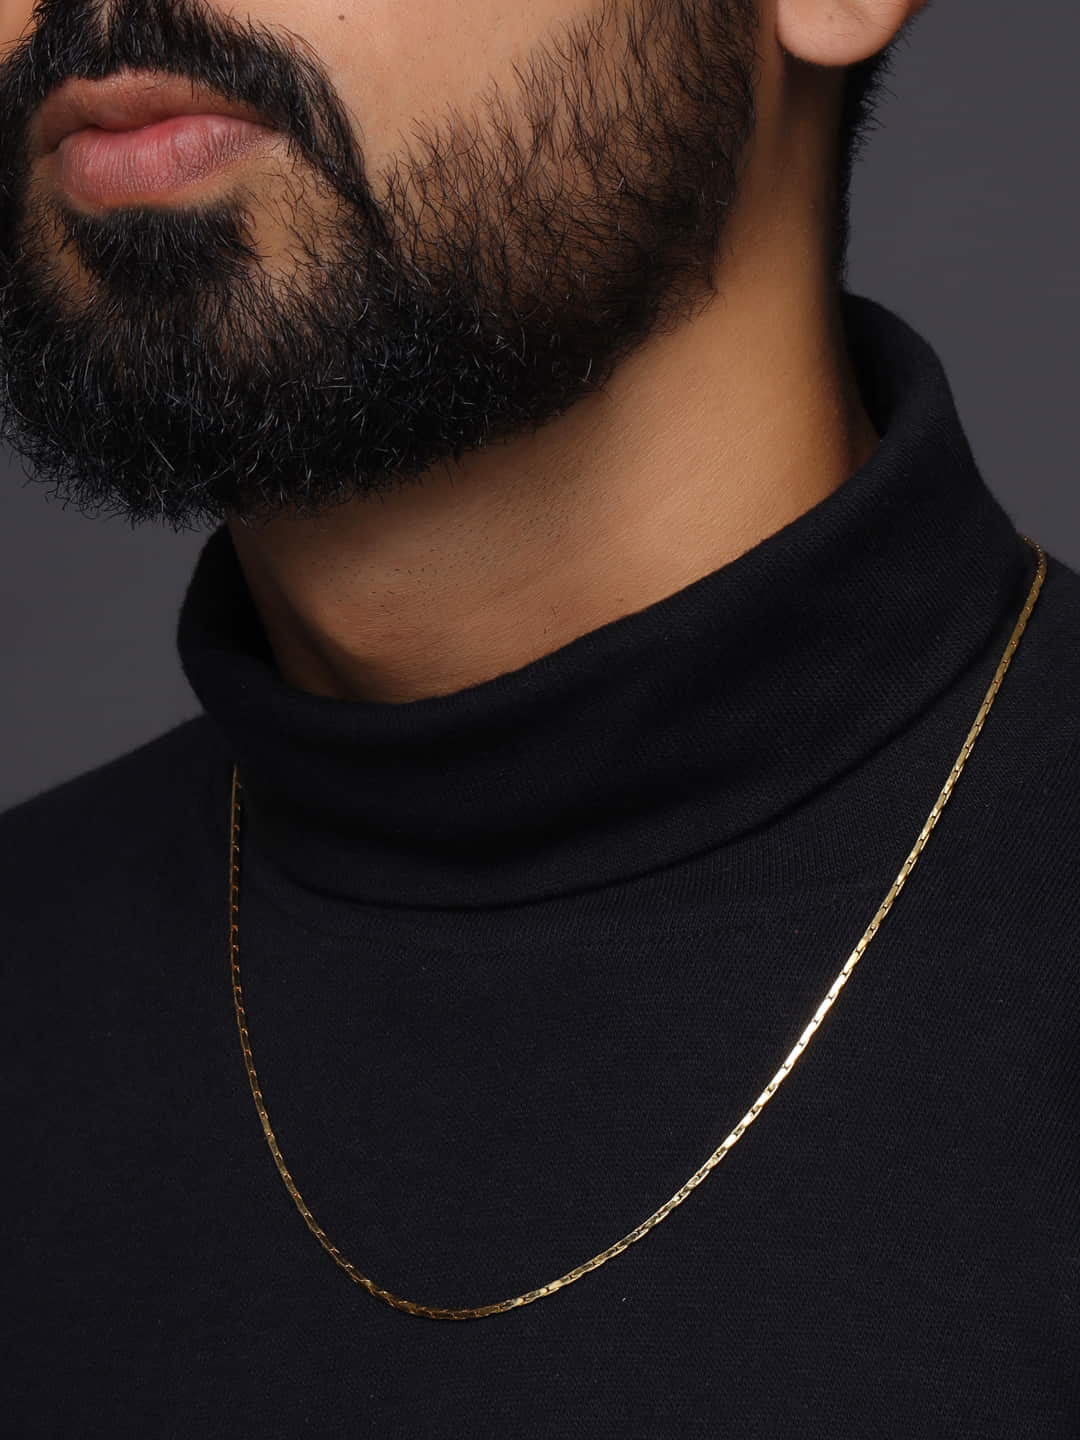 Unique Design Gold Plated Link Chain For Men